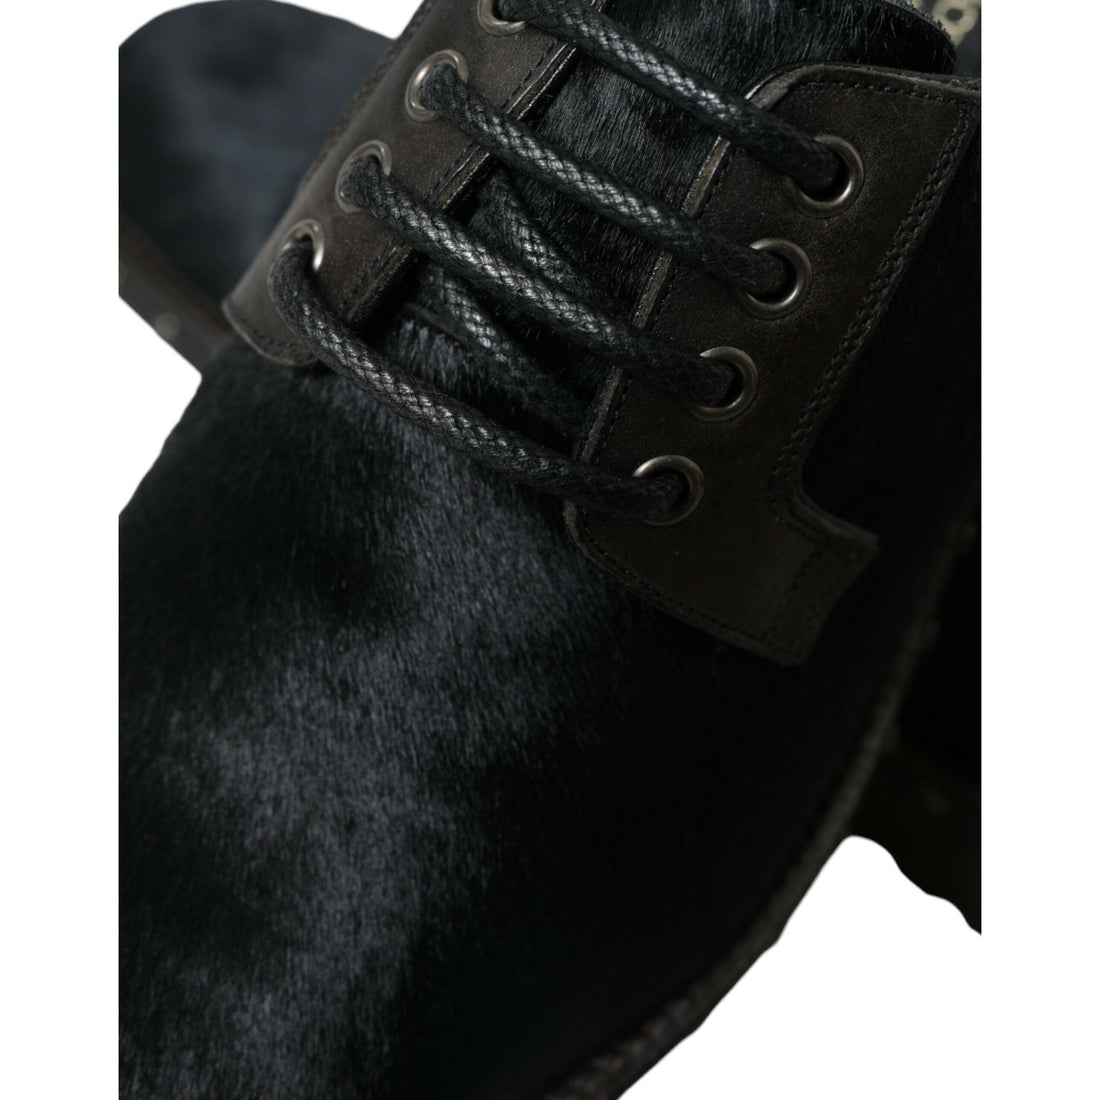 Dolce & Gabbana Black Stable Fur Derby SAN PIETRO Dress Shoes